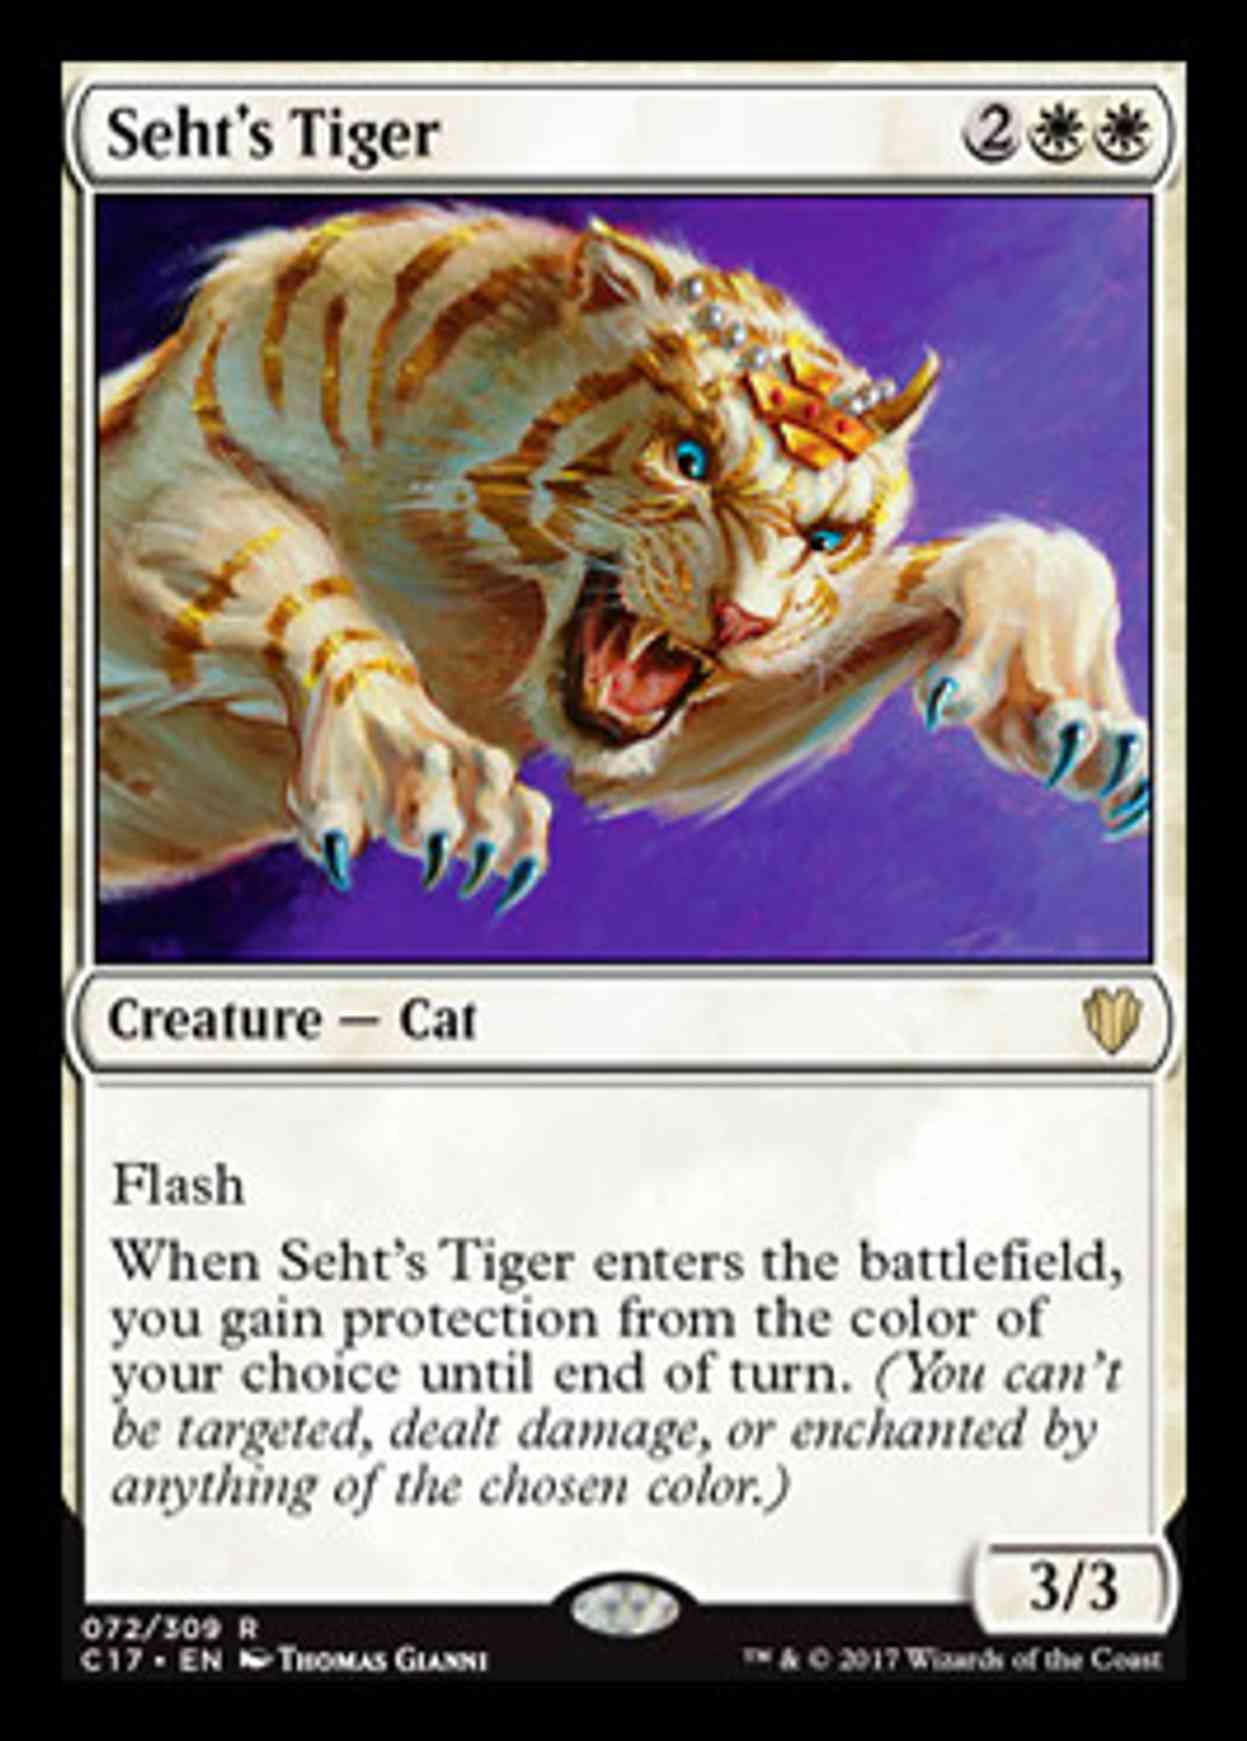 Seht's Tiger magic card front